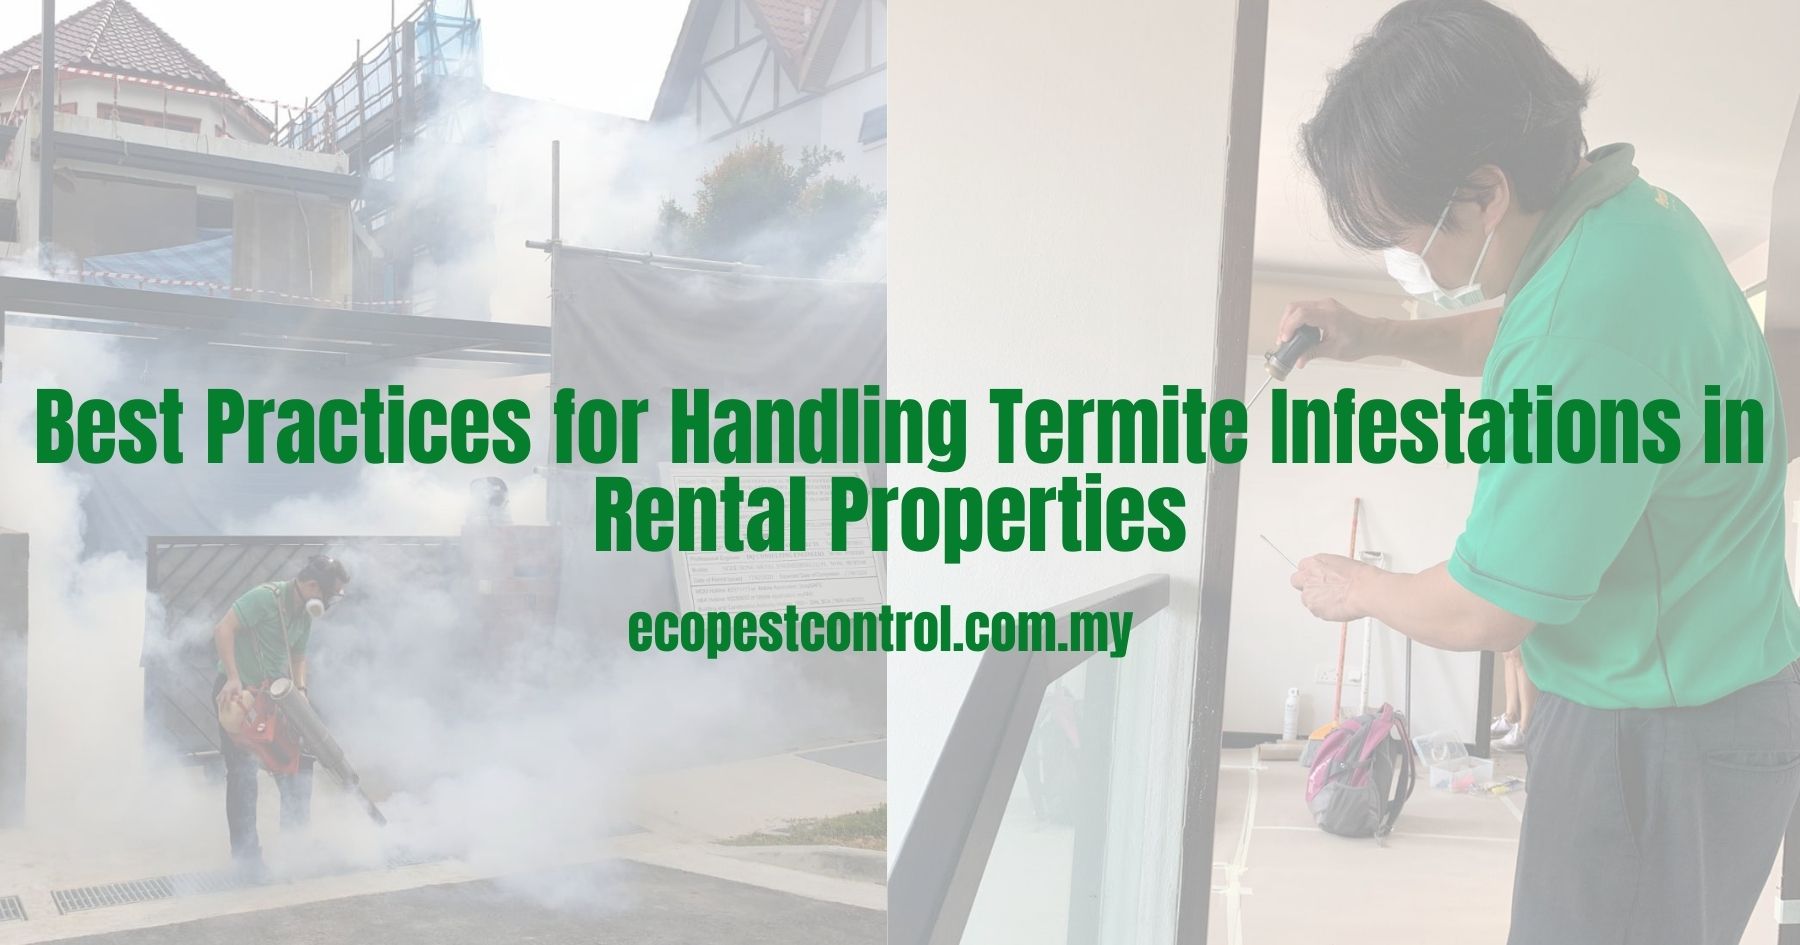 Best Practices for Handling Termite Infestations in Rental Properties